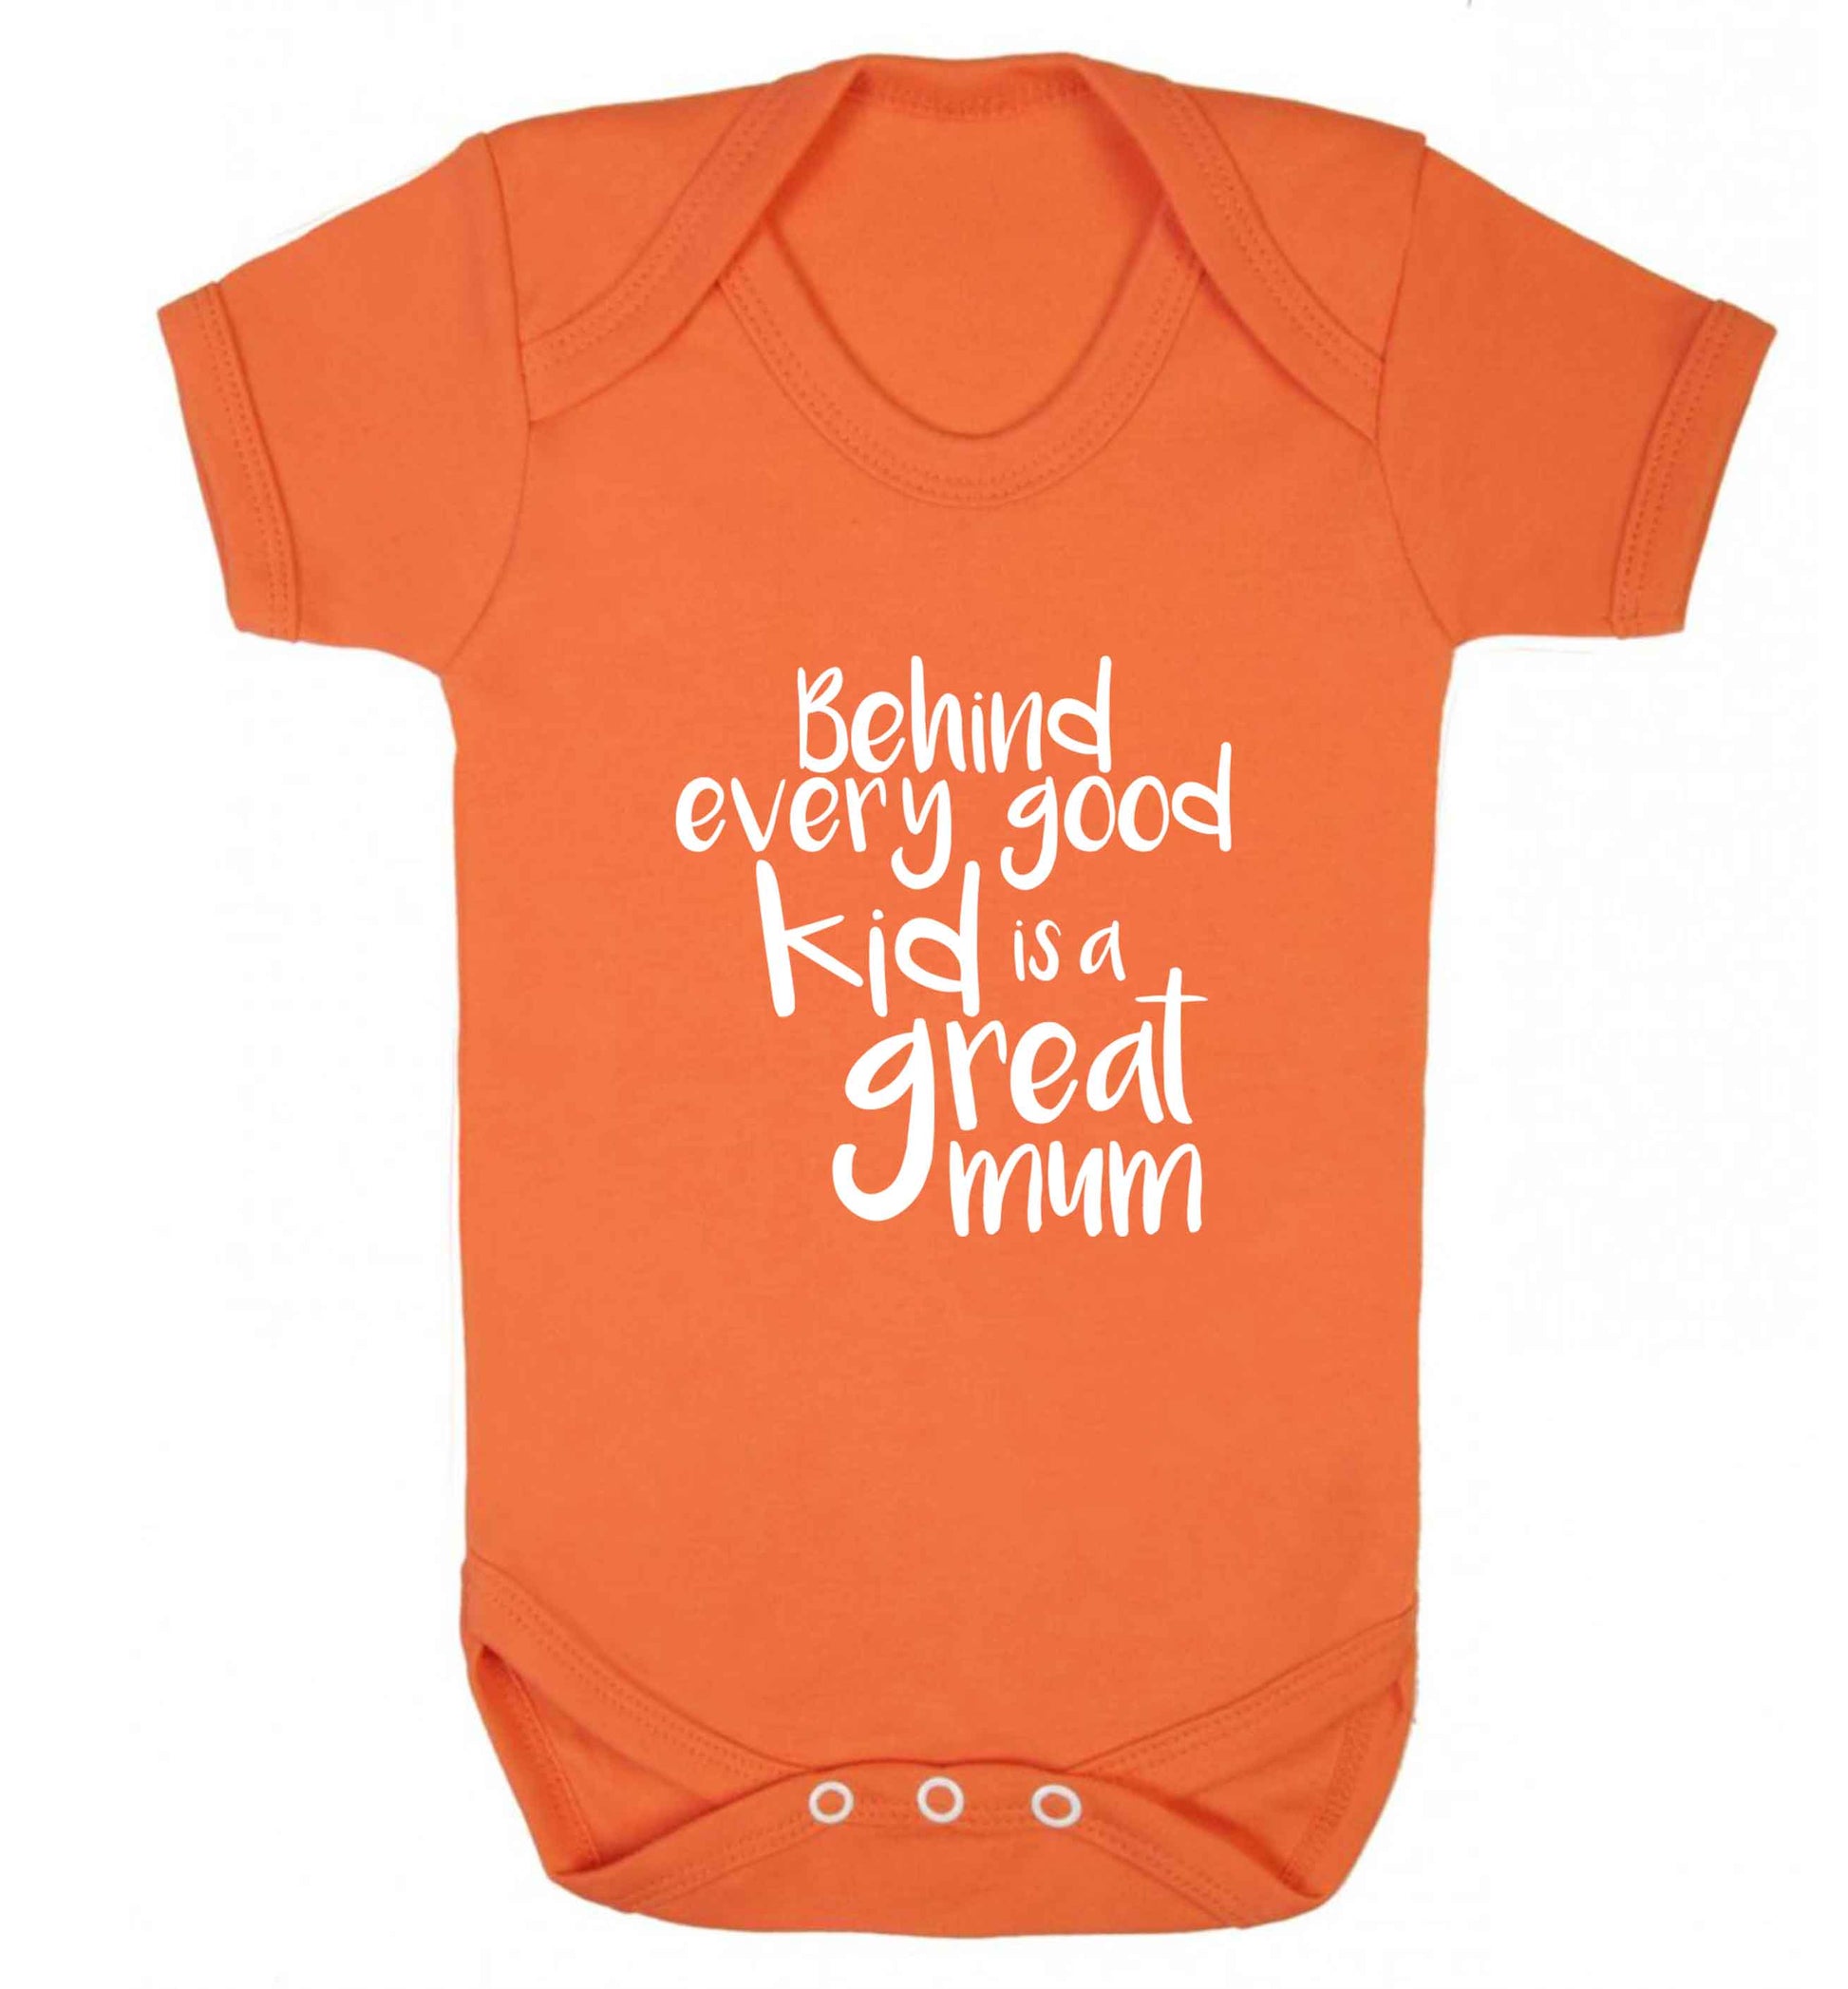 Behind every good kid is a great mum baby vest orange 18-24 months